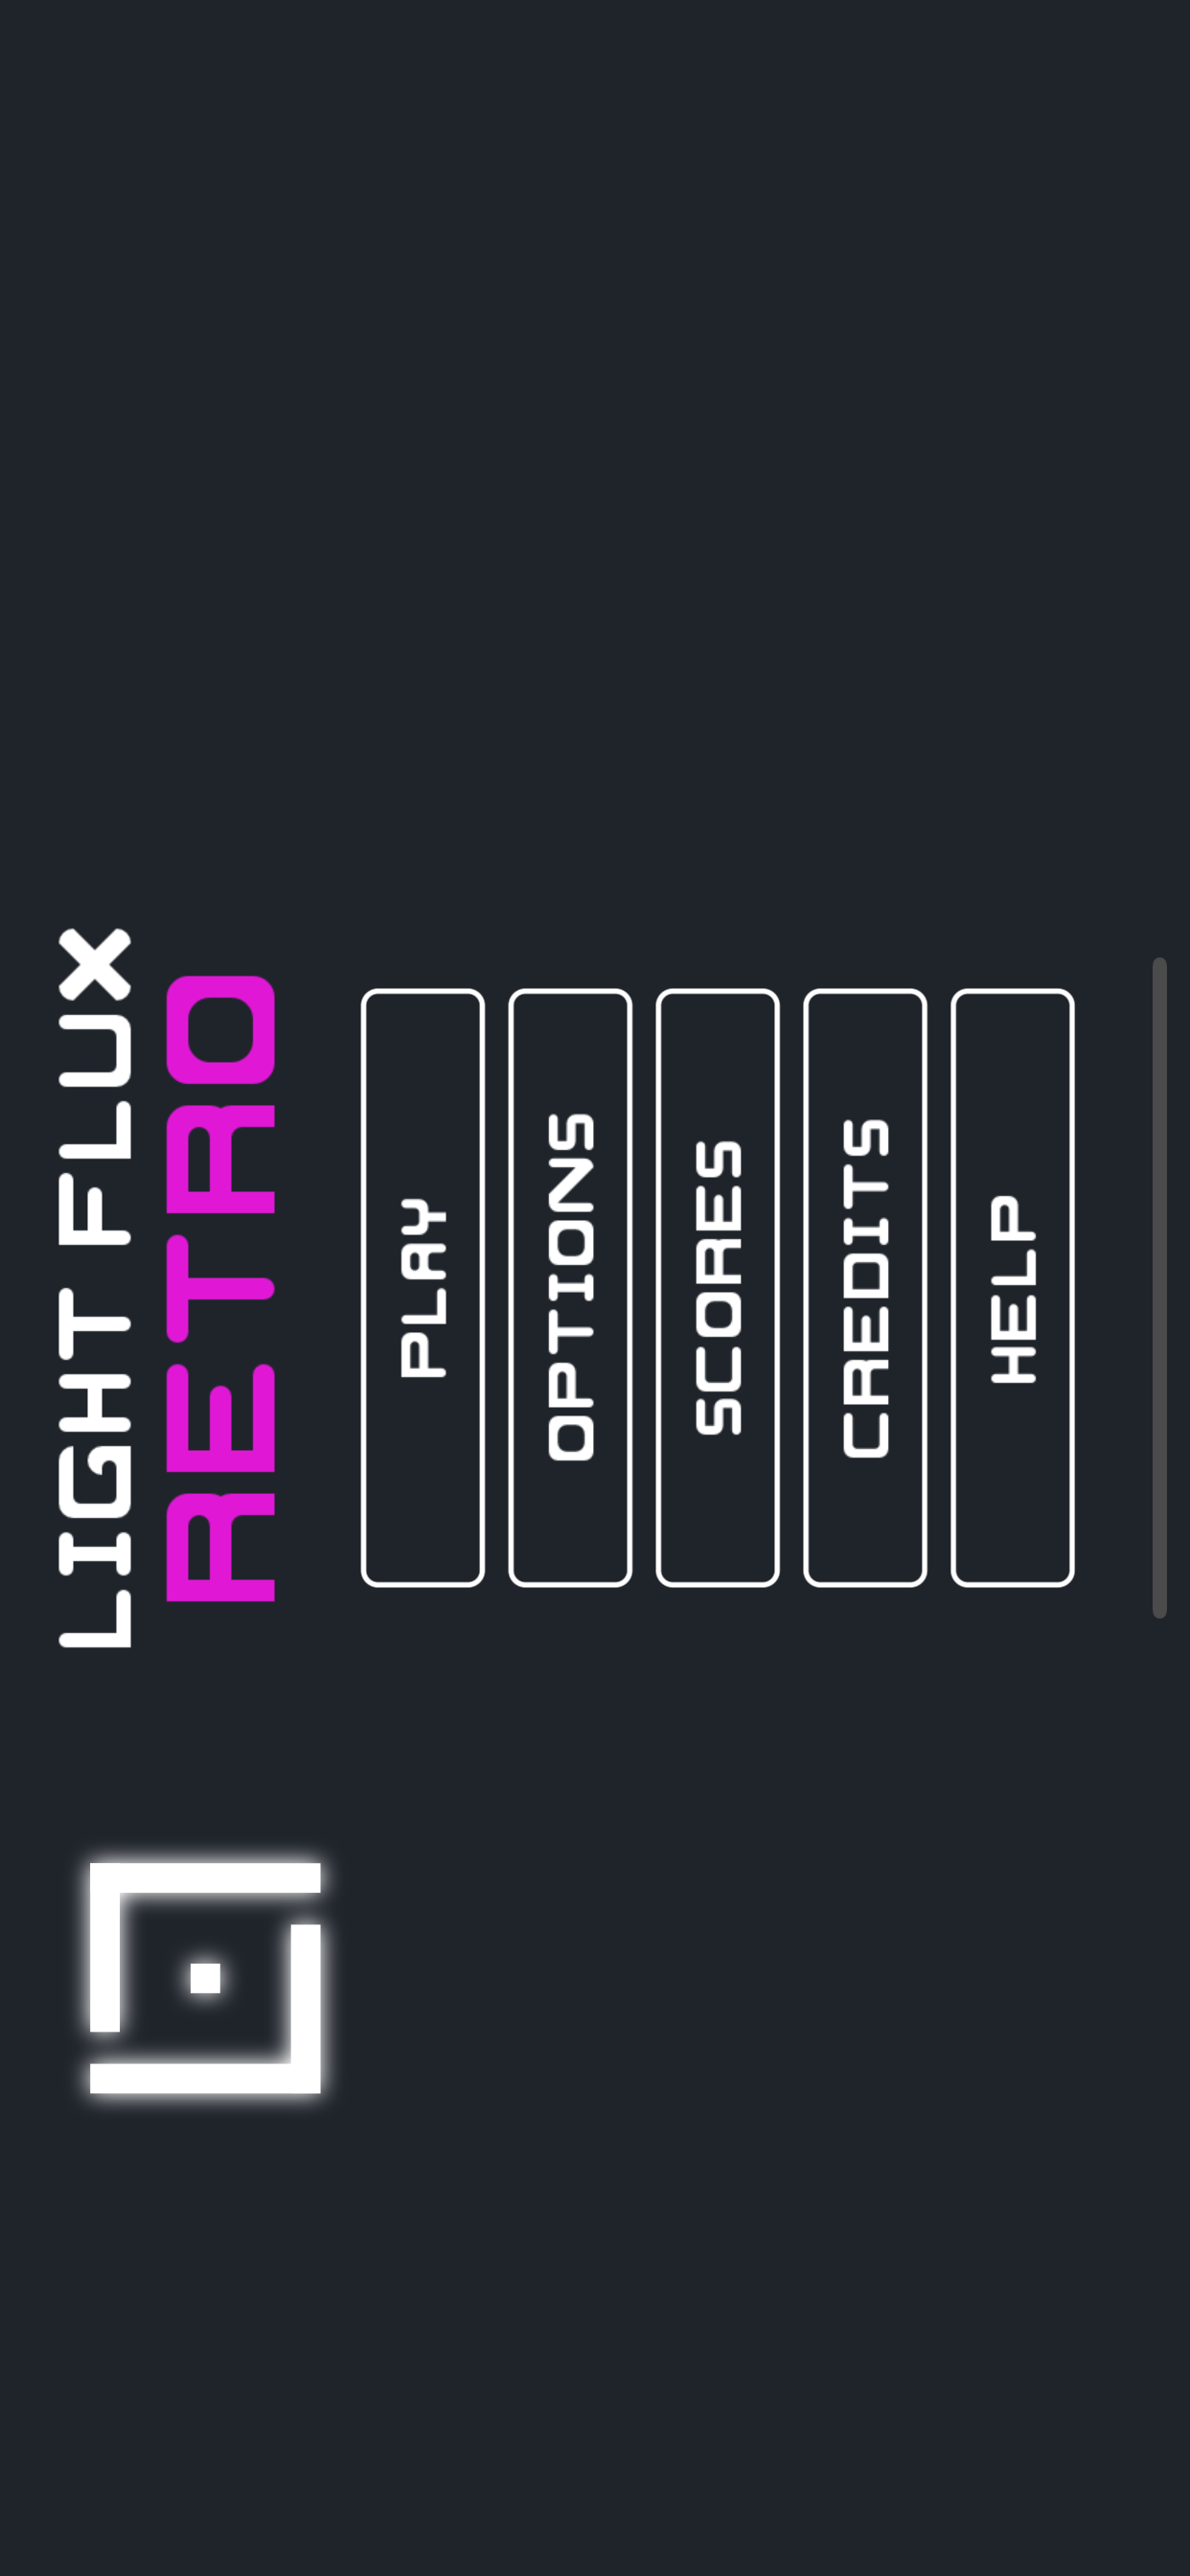 lightflux-mobile screenshot 2